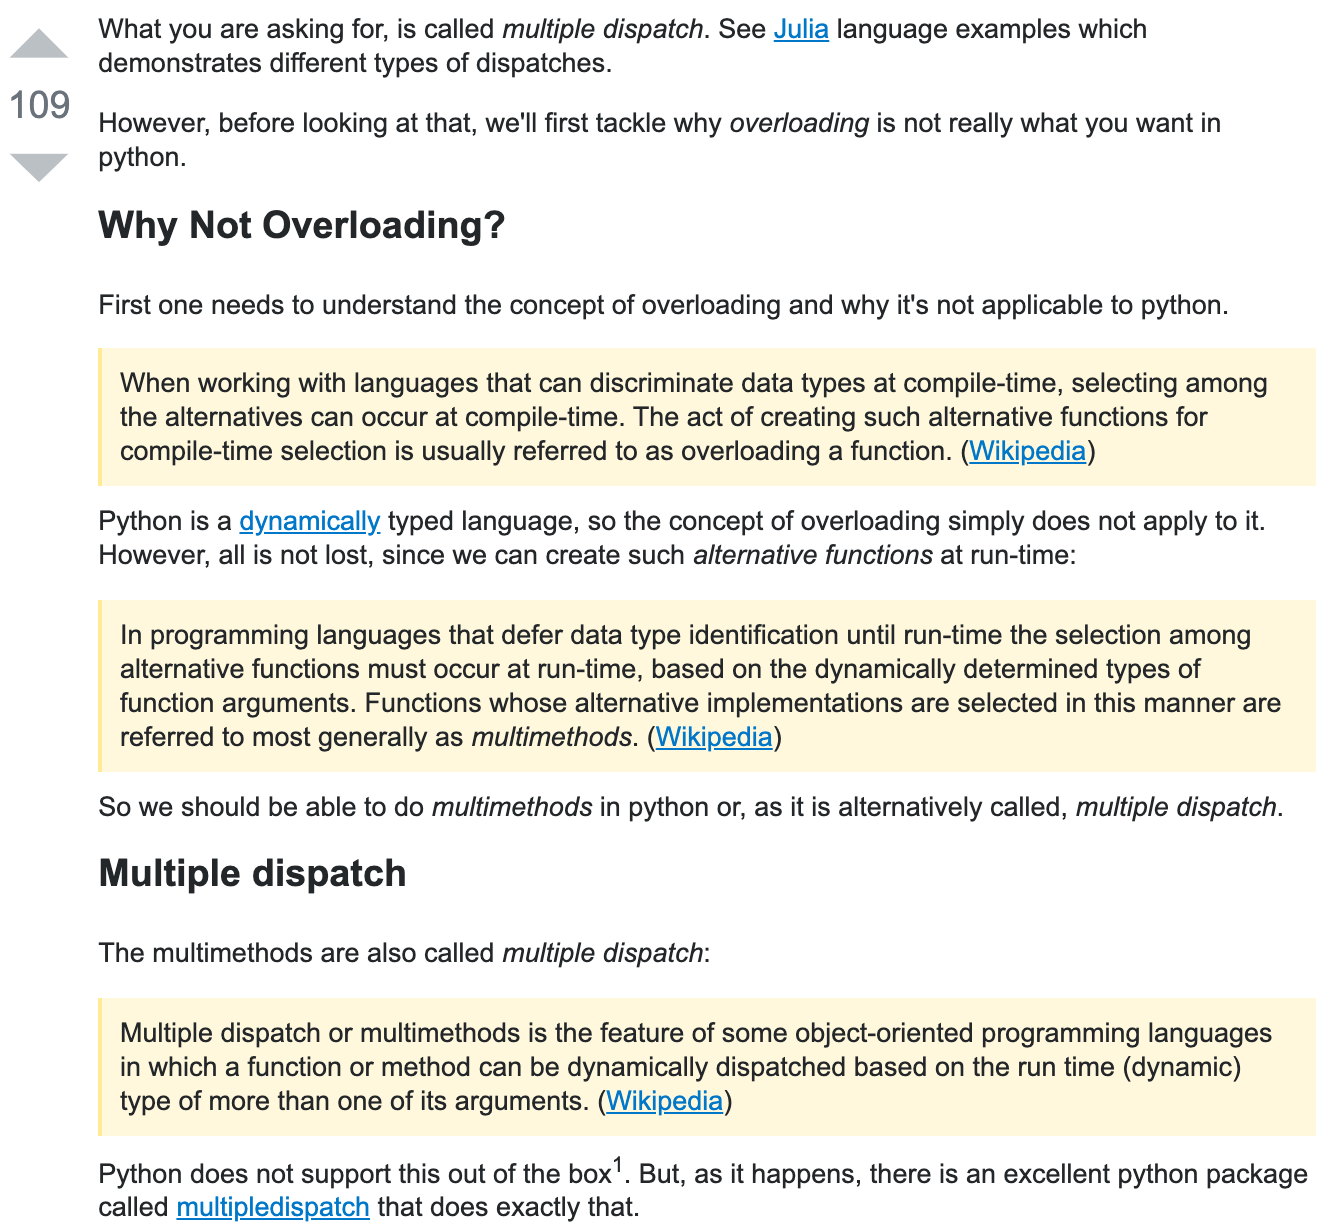 Method Overloading in Python  How method overloading works in python?